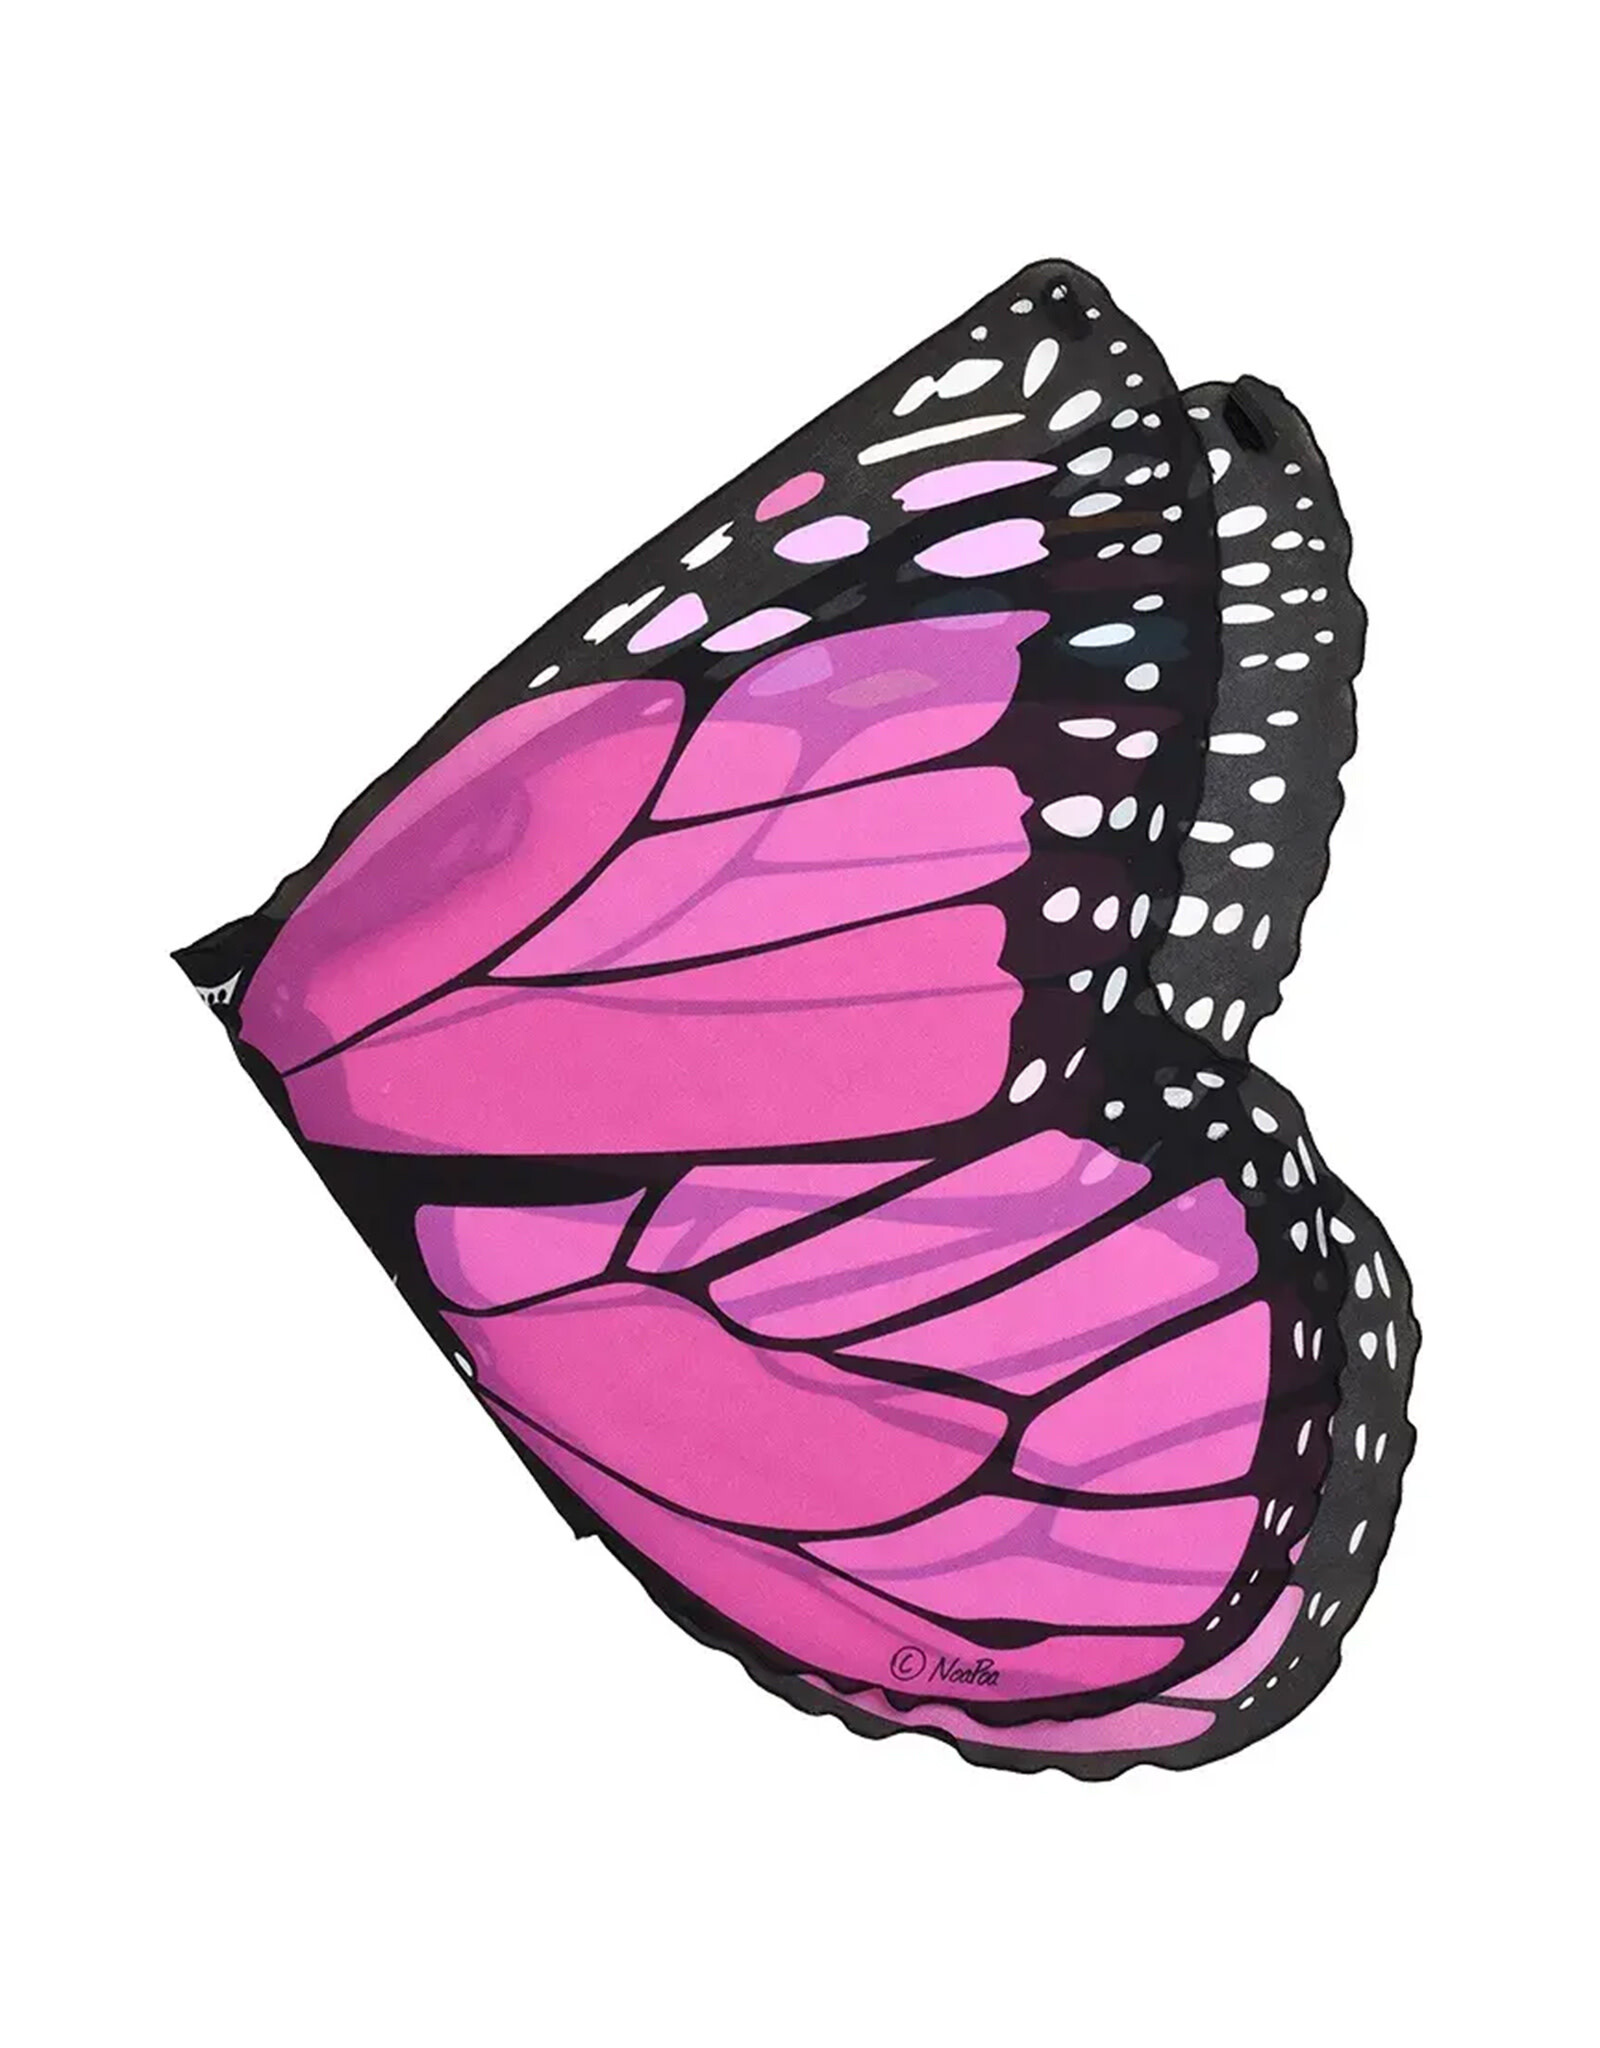 Douglas Douglas Cuddle Toys Dress Up Pink Monarch Wings